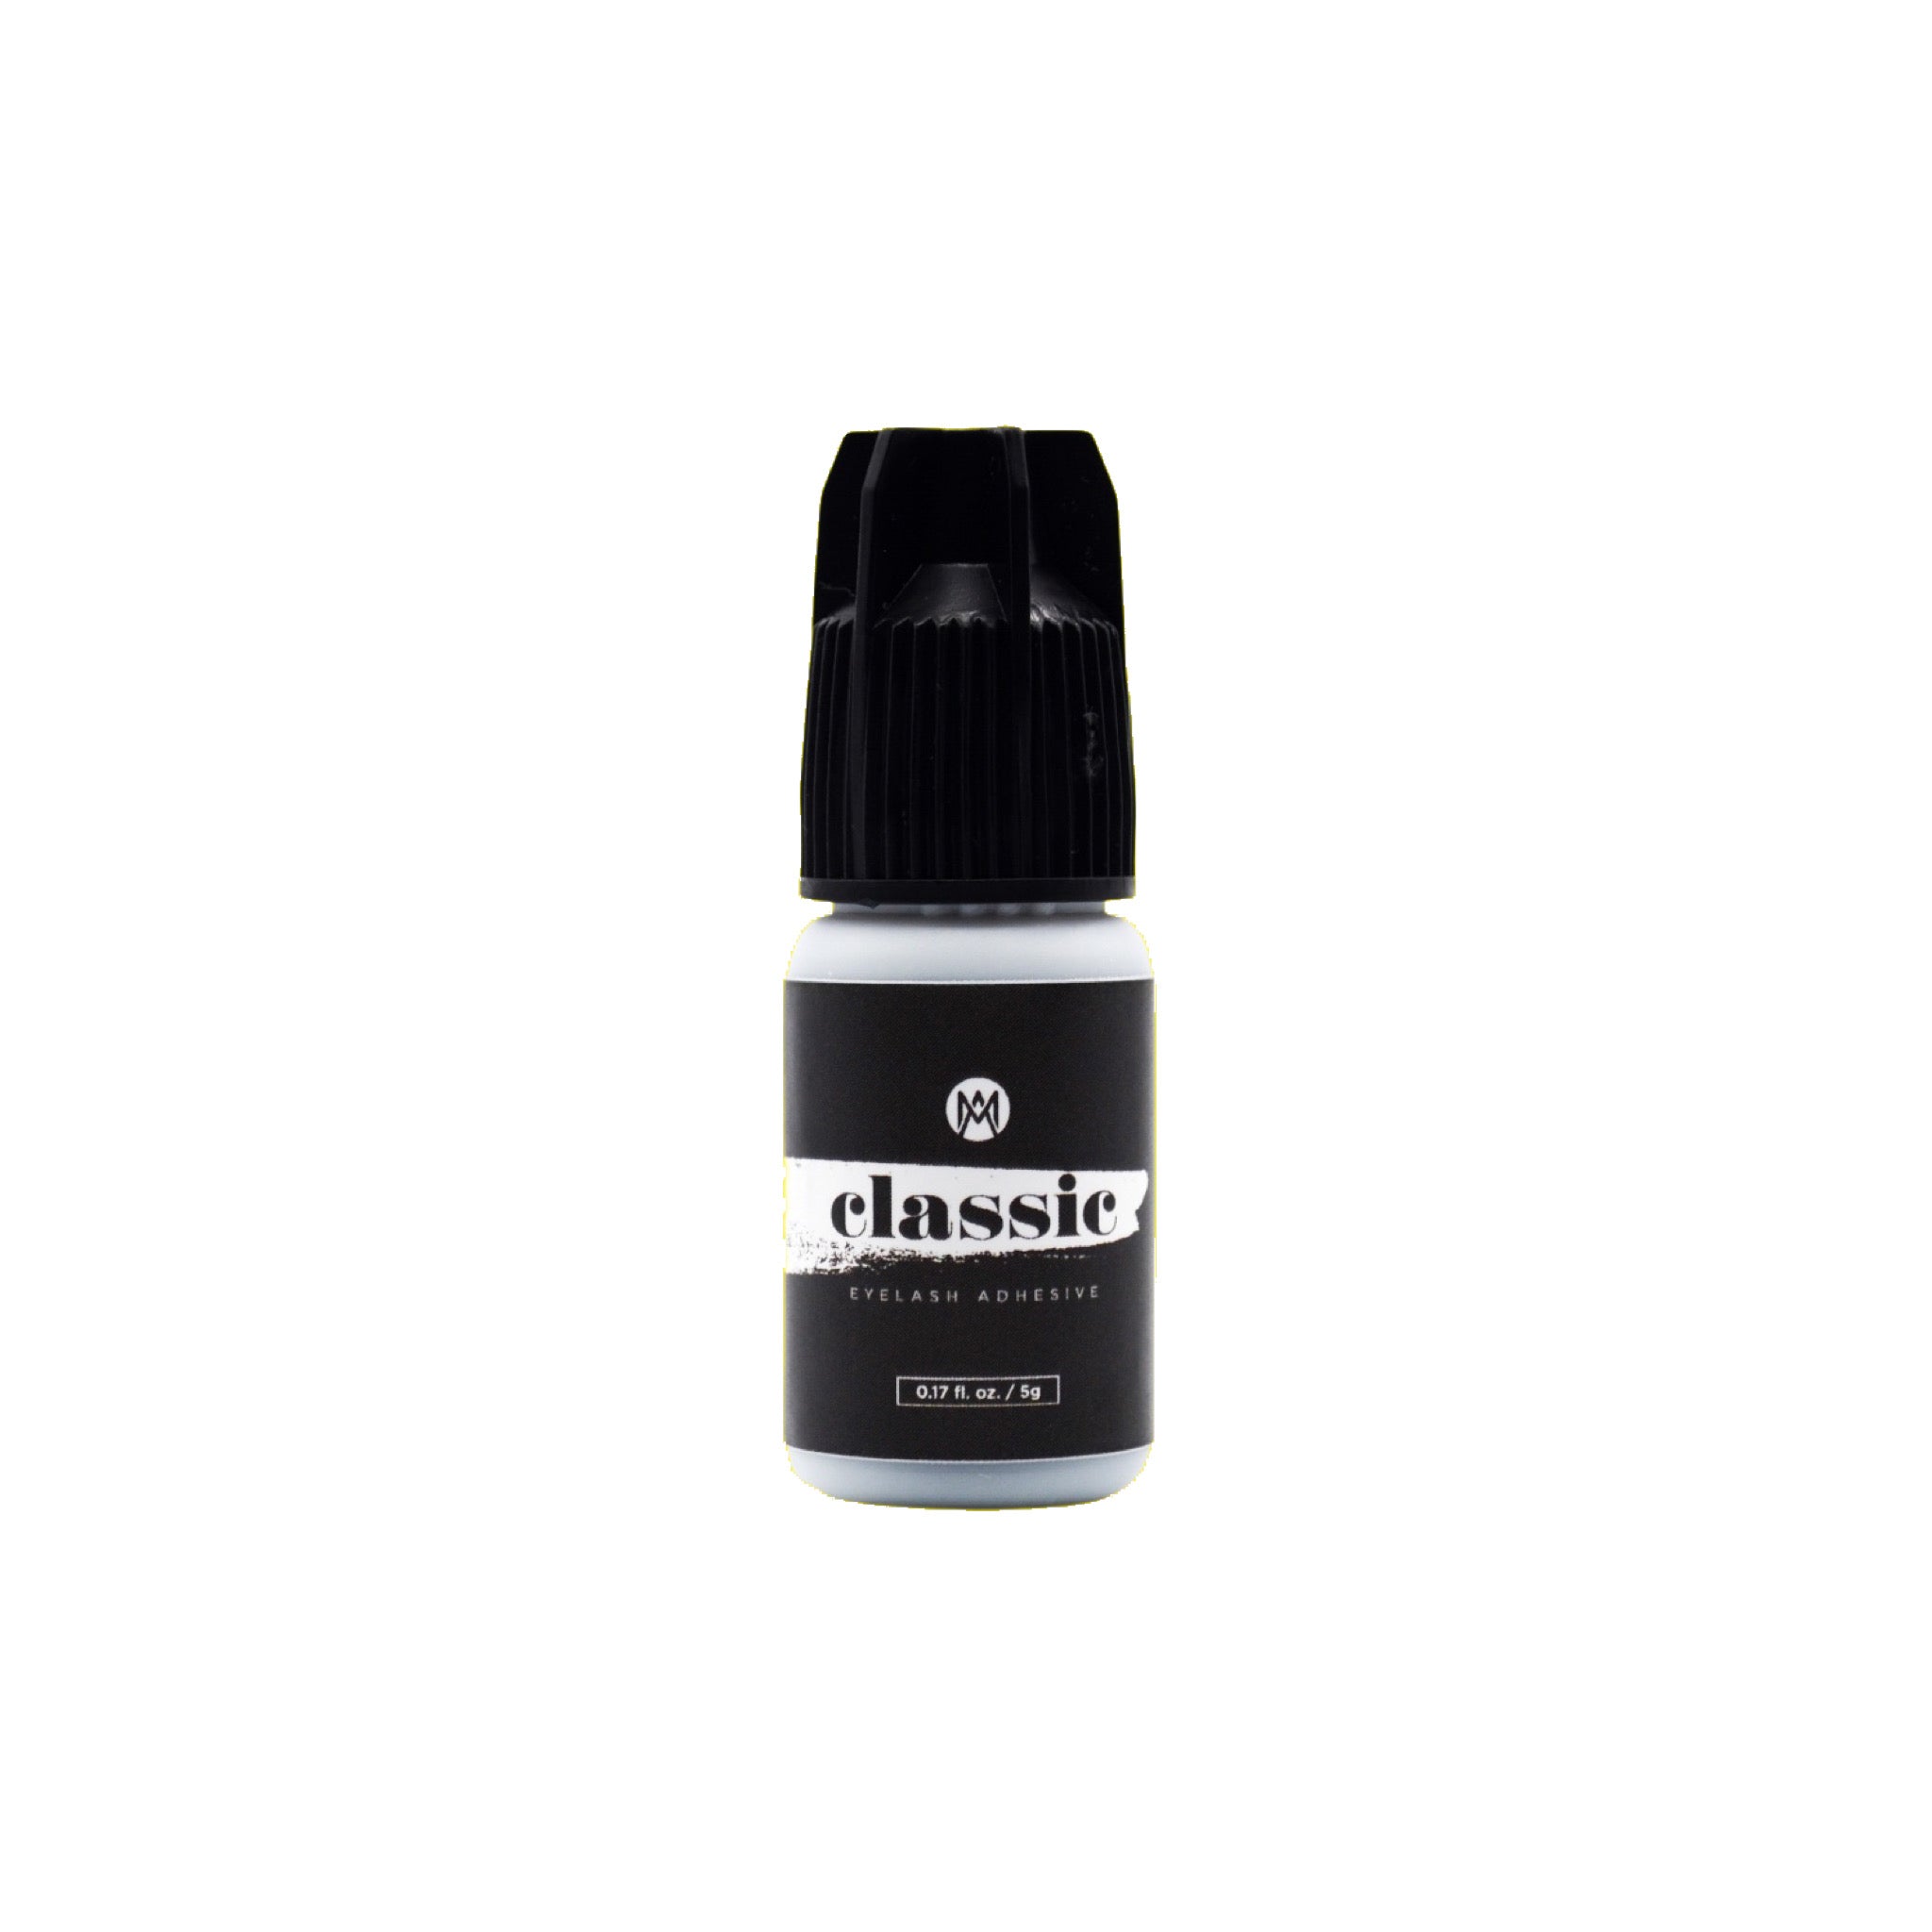 Professional Eyelash Glue. 1-2s drying eyelash extension glue